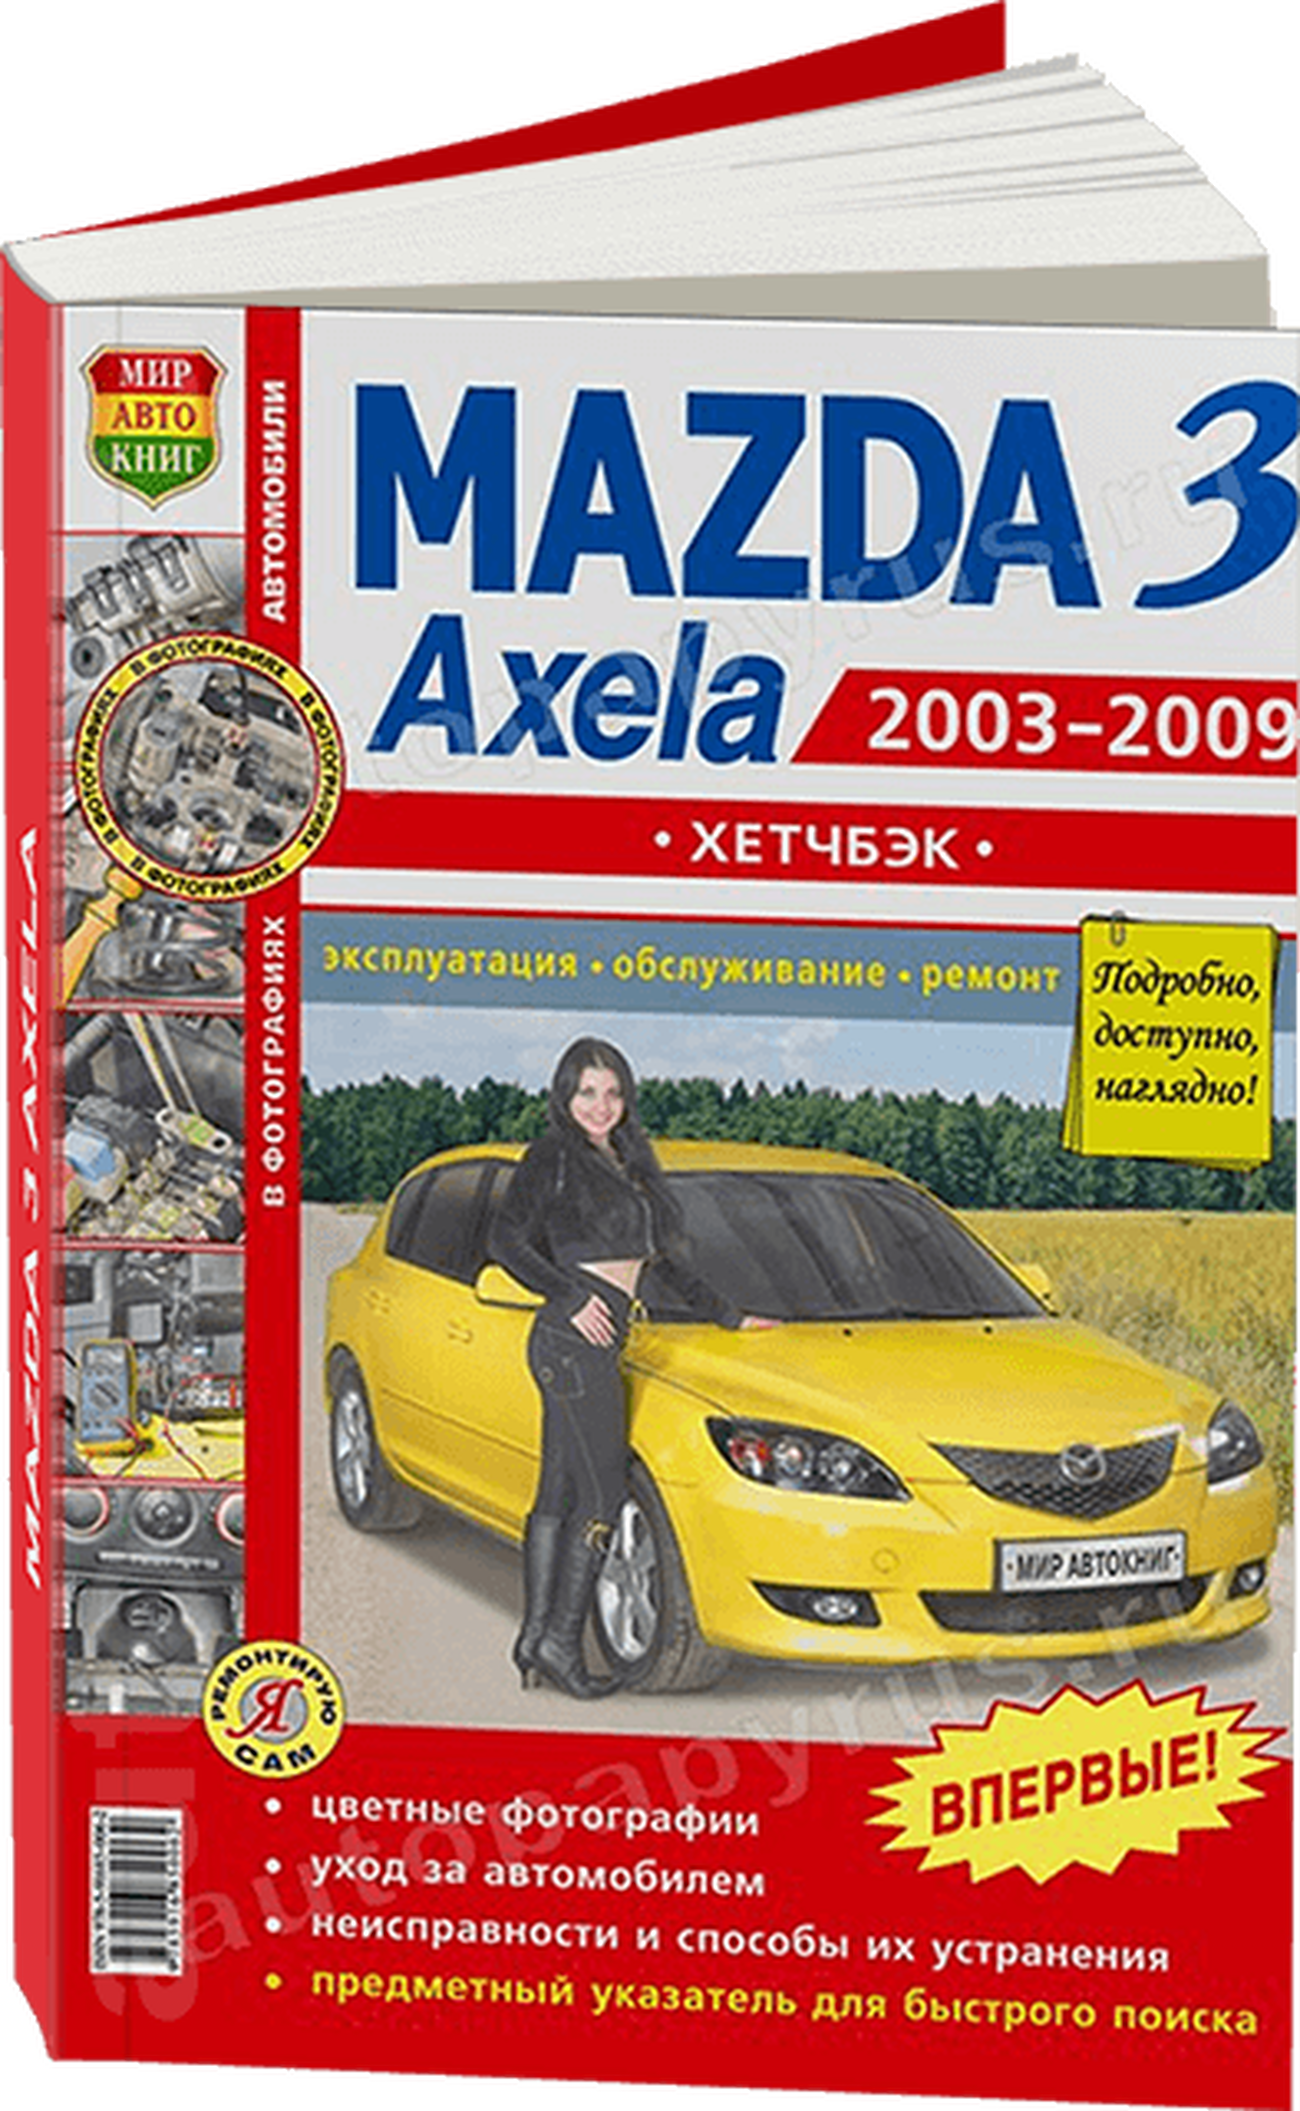 Книга: MAZDA 3 / AXELA (б) хет. 2003-2009 г.в., рем., экспл., то, ЦВЕТ. фото., сер. ЯРС | Мир Автокниг